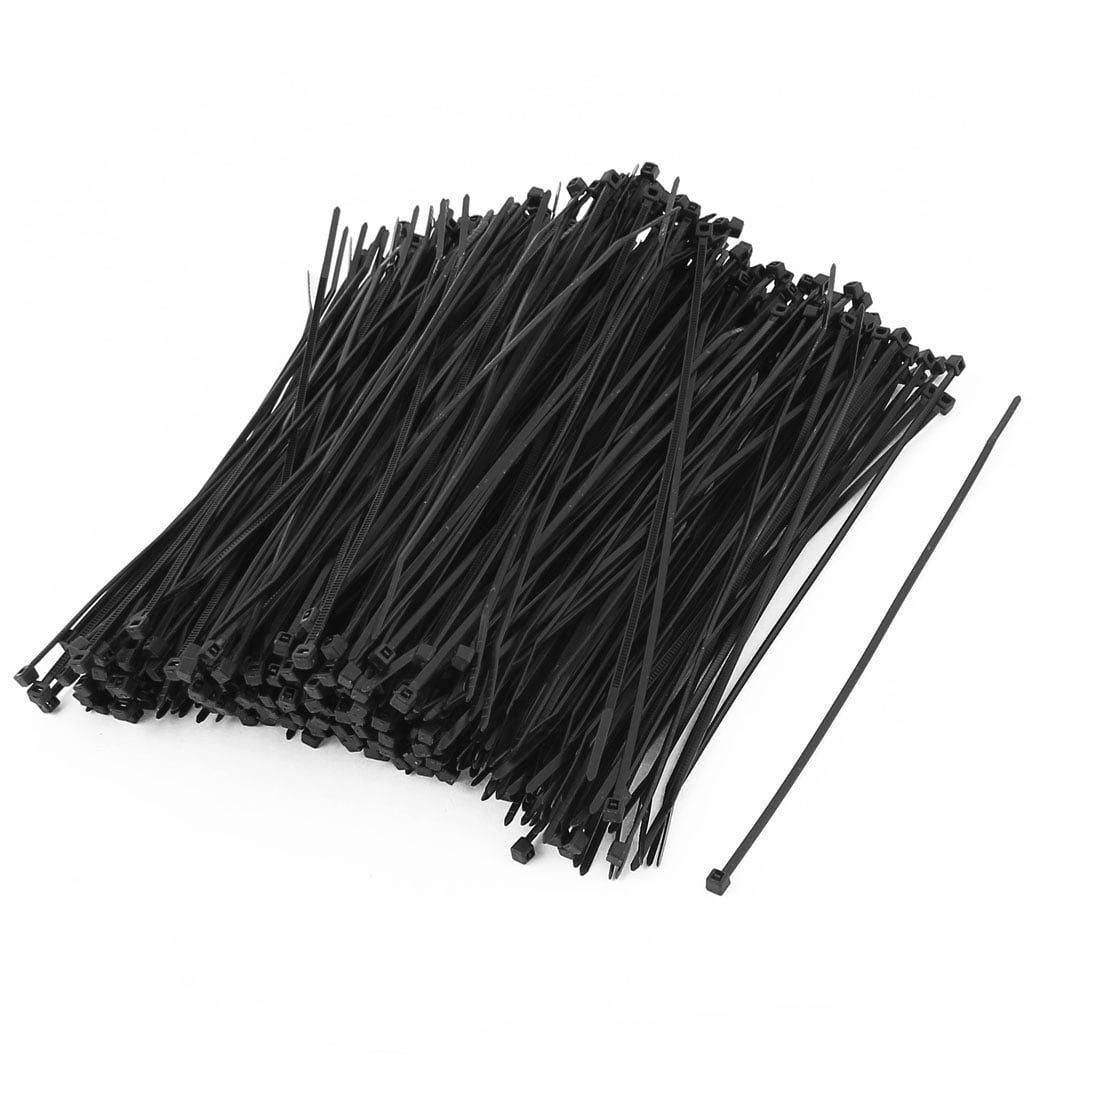 8 Inch Cable Ties 500 pcs Nylon Plastic Wrap Zip Ties 3mm Black 